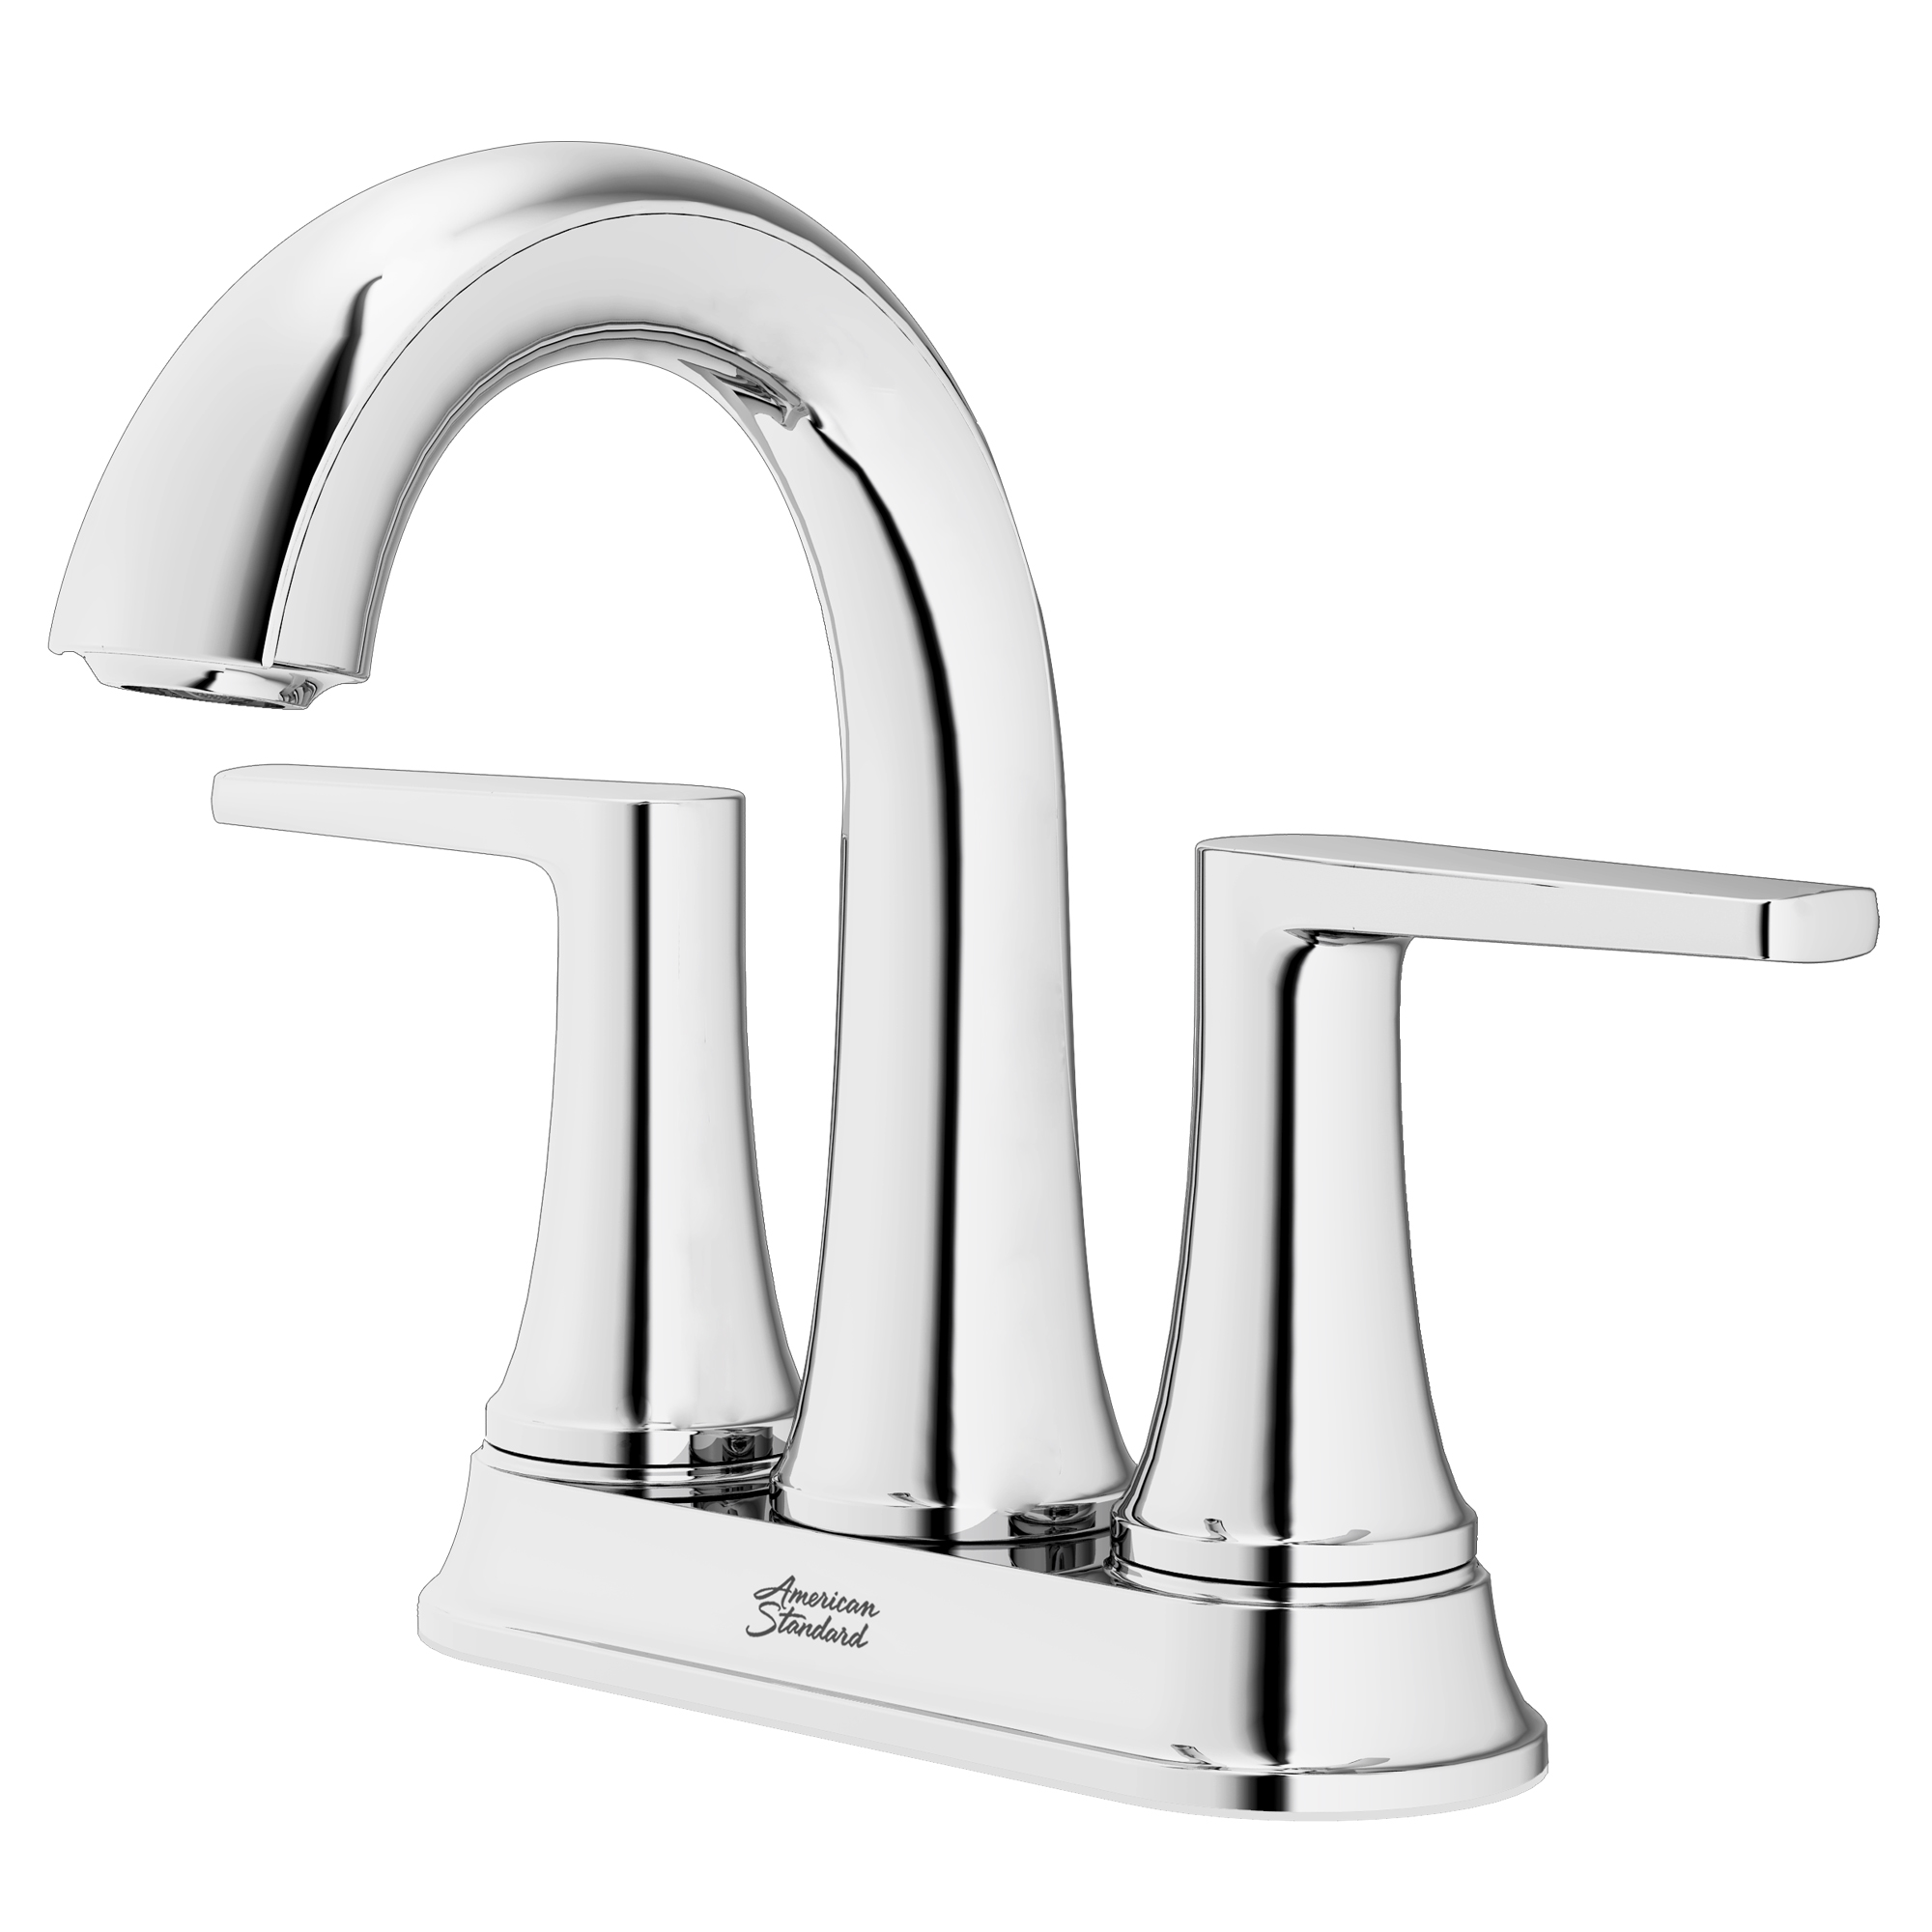 Becklow Two-Handle 4-Inch Centerset Bathroom Faucet